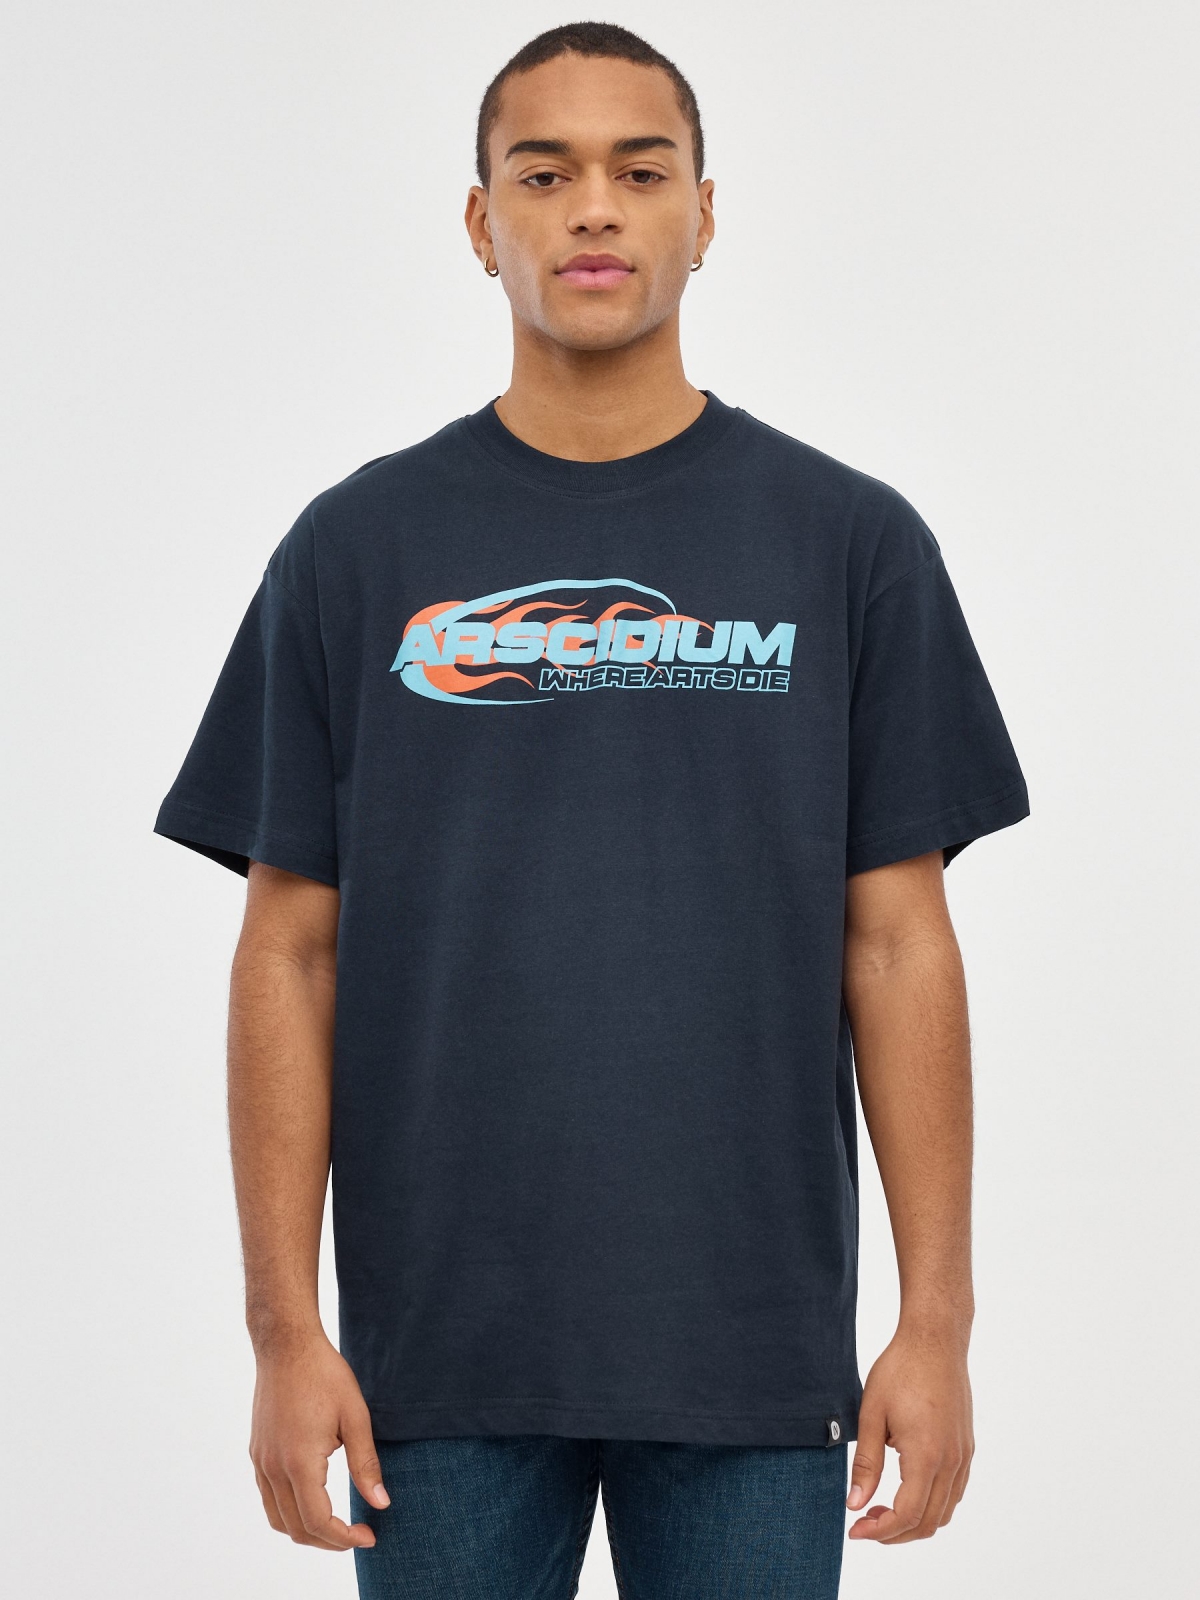 Camiseta Arscidium azul marino vista media frontal